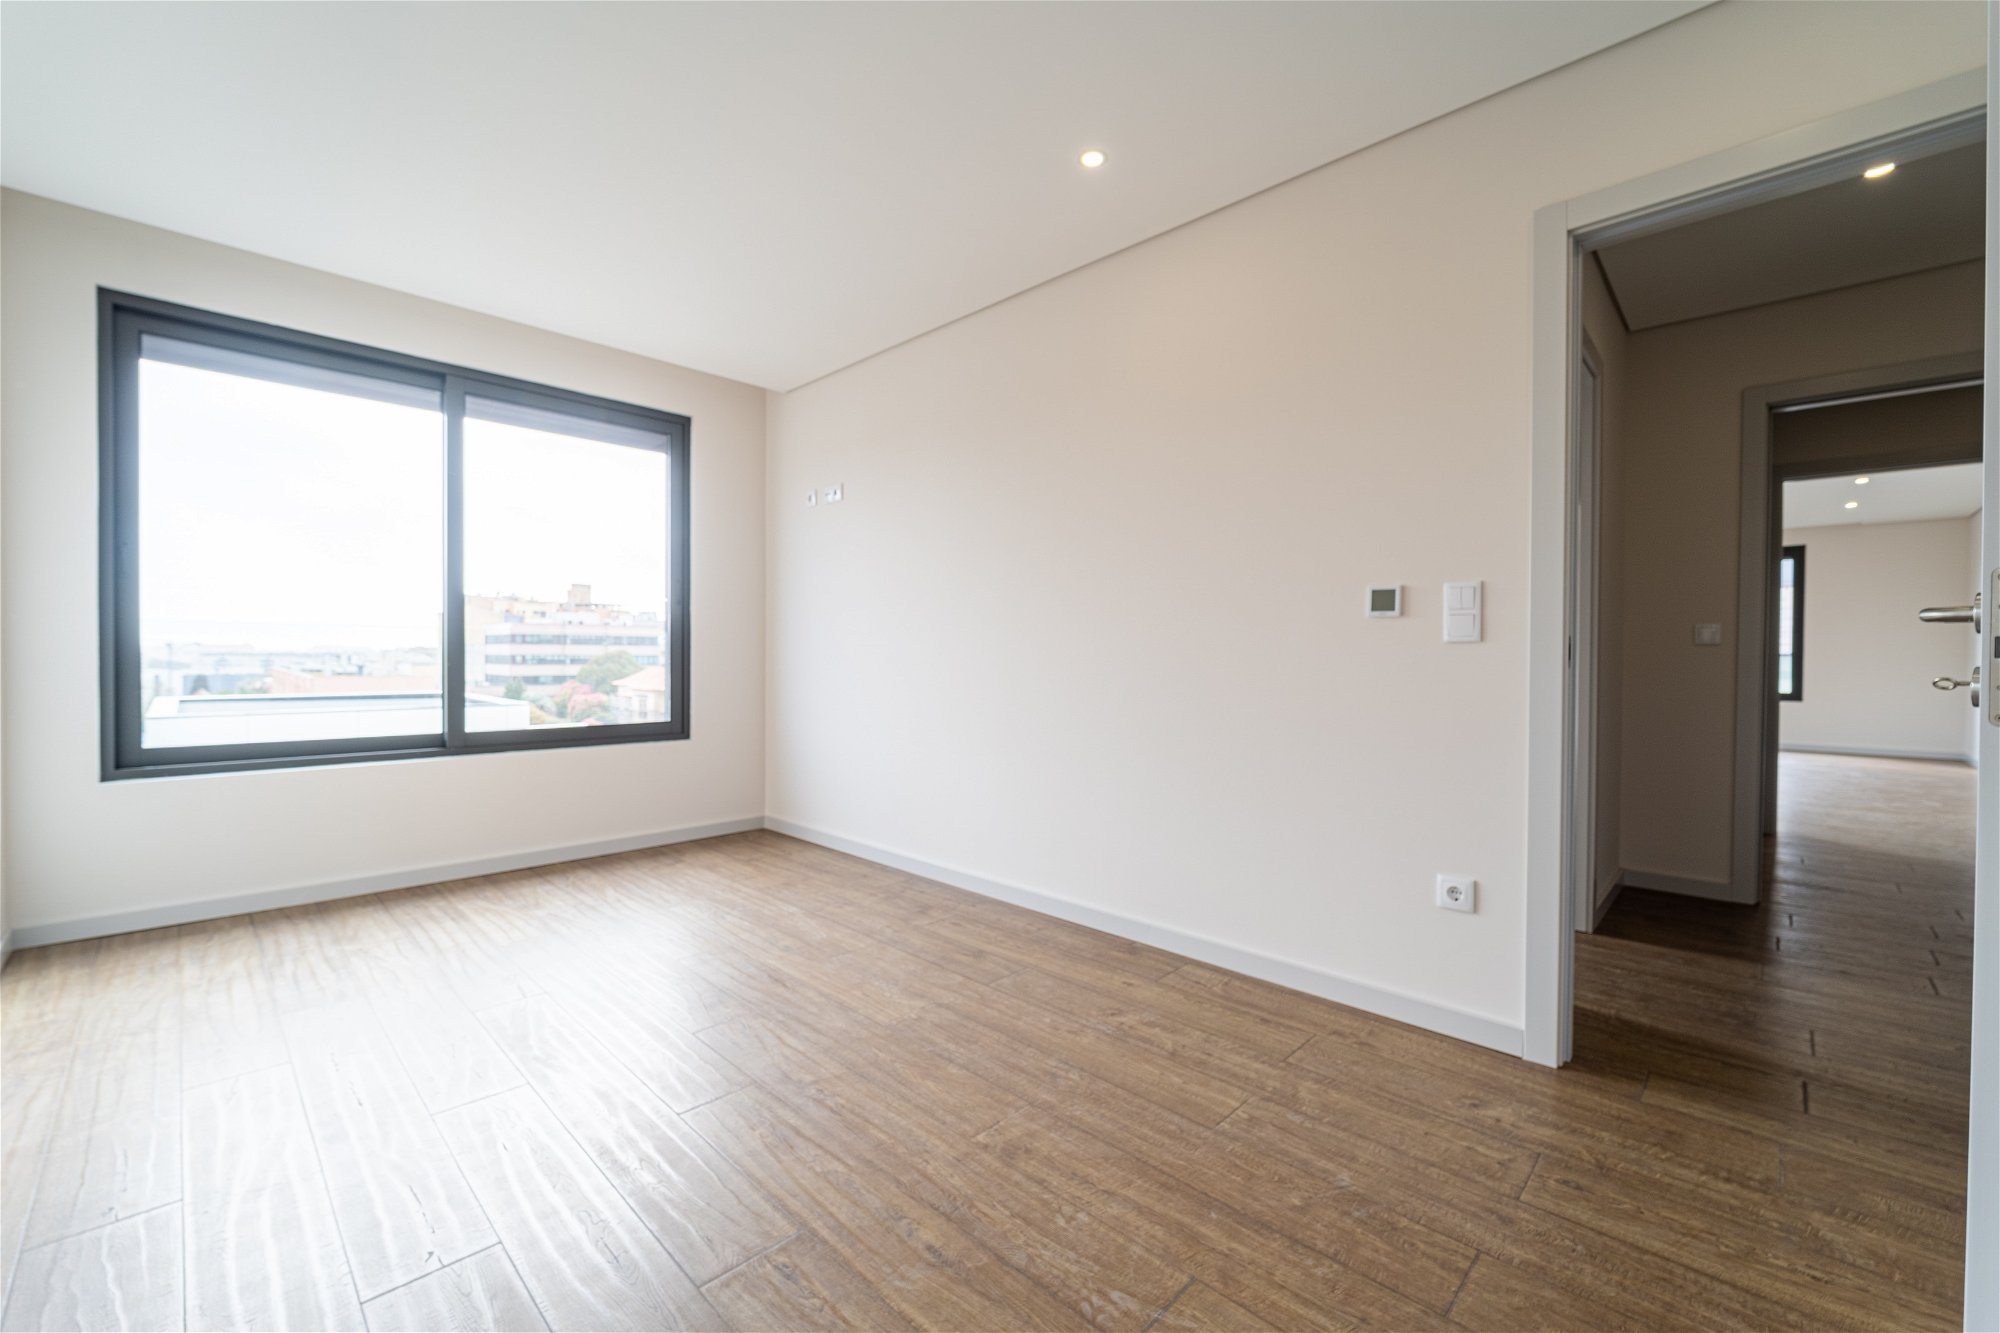 3 bedrooms apartment with balcony in Boavista, Porto 3092702609